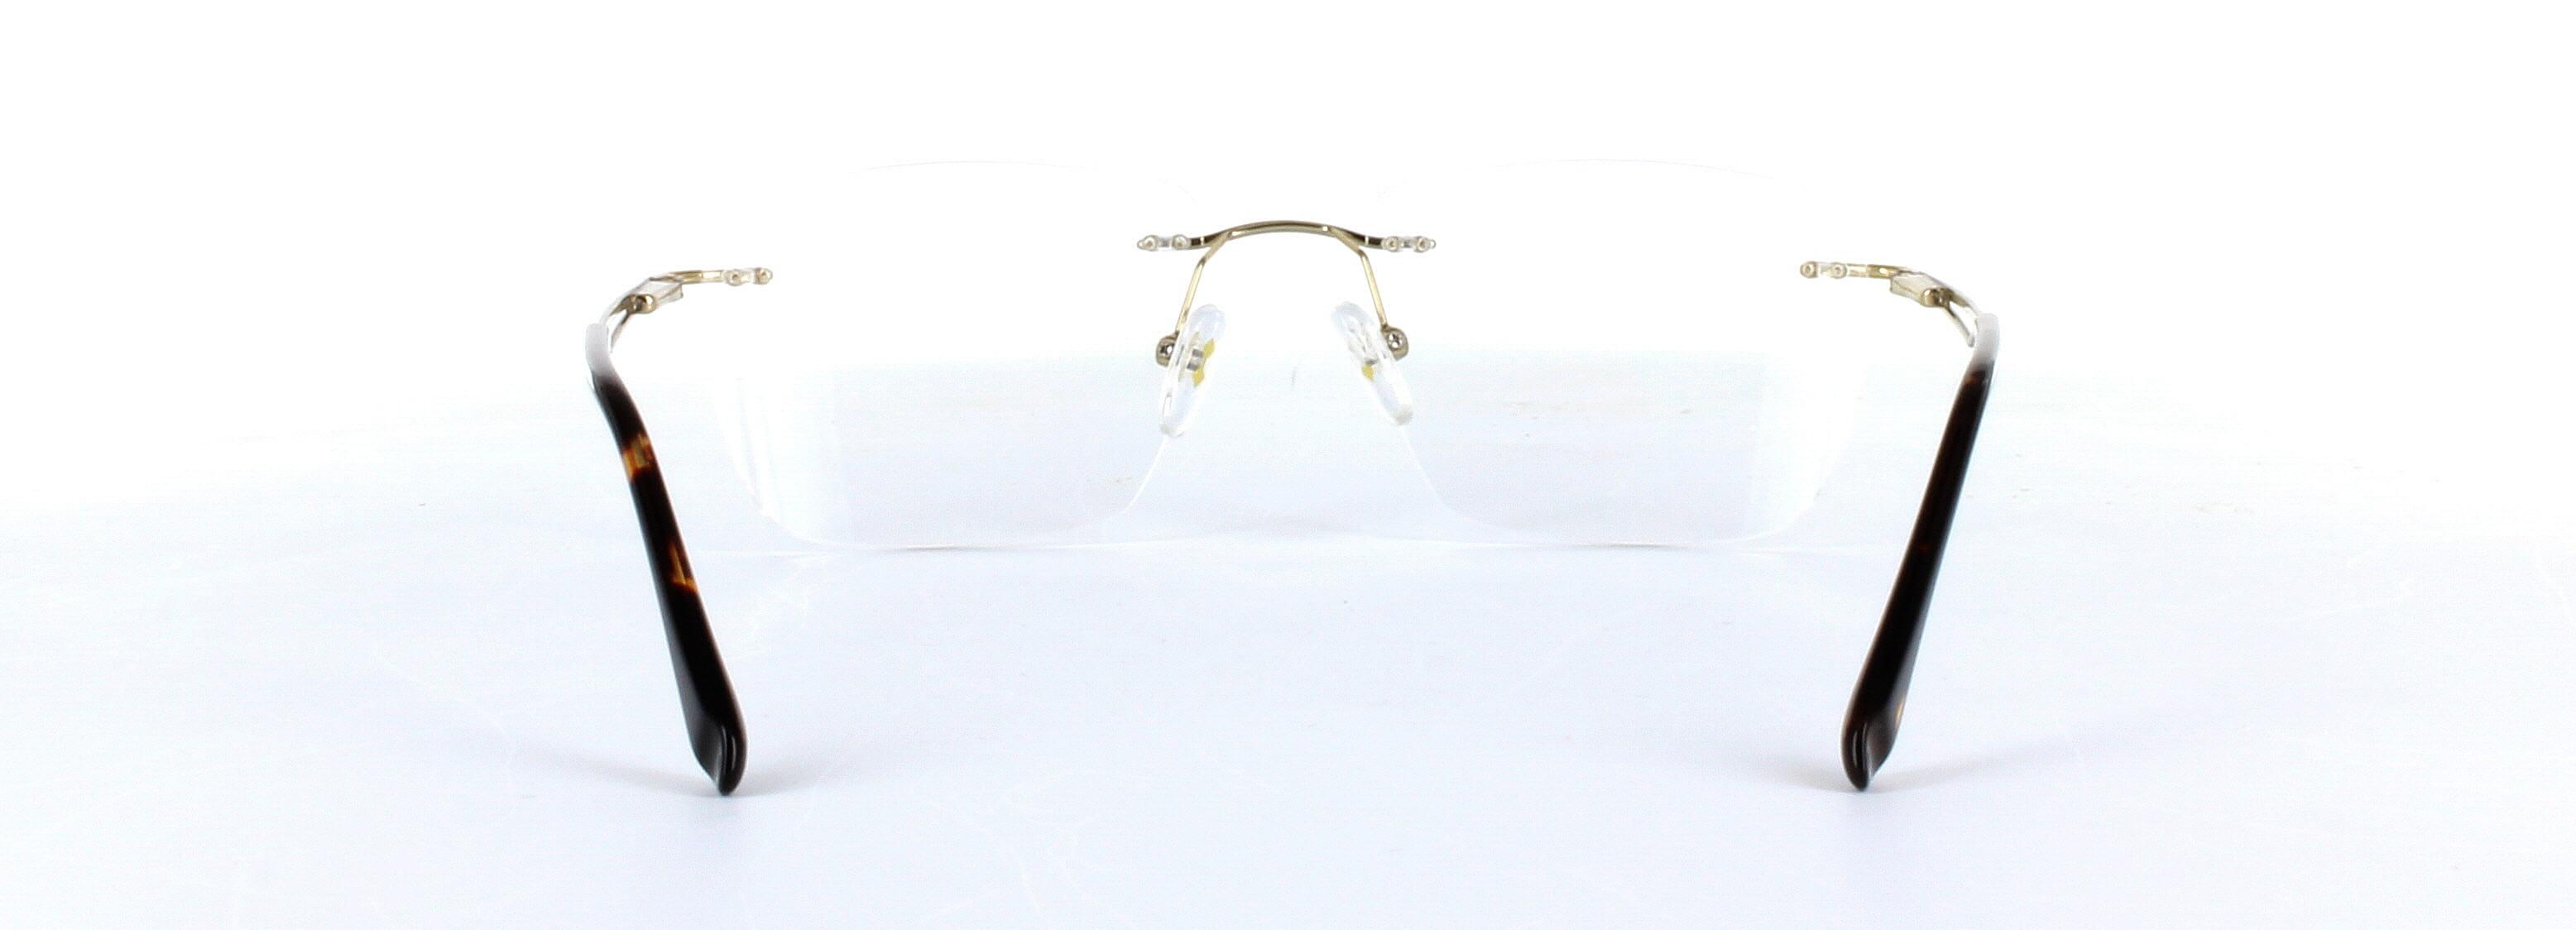 Ghost - unisex rimless glasses - image 3